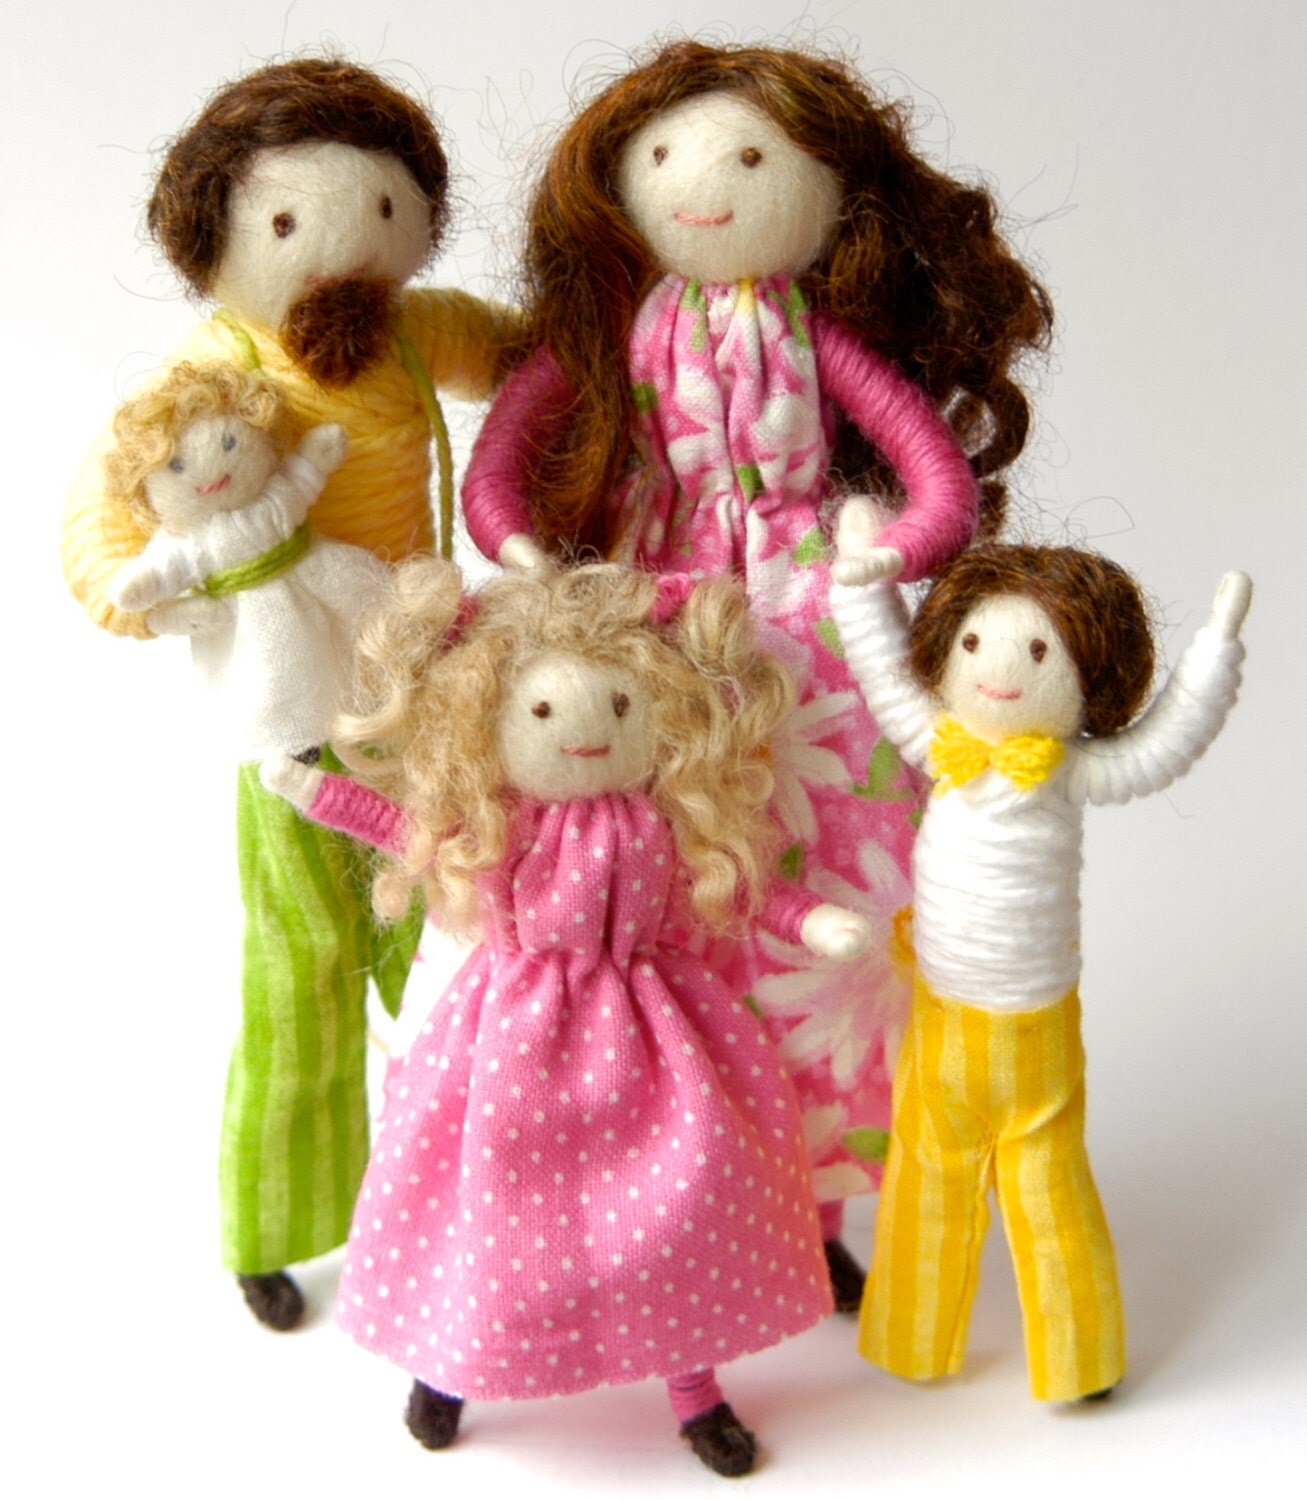 Dollhouse doll family bendy dolls Waldorf style all